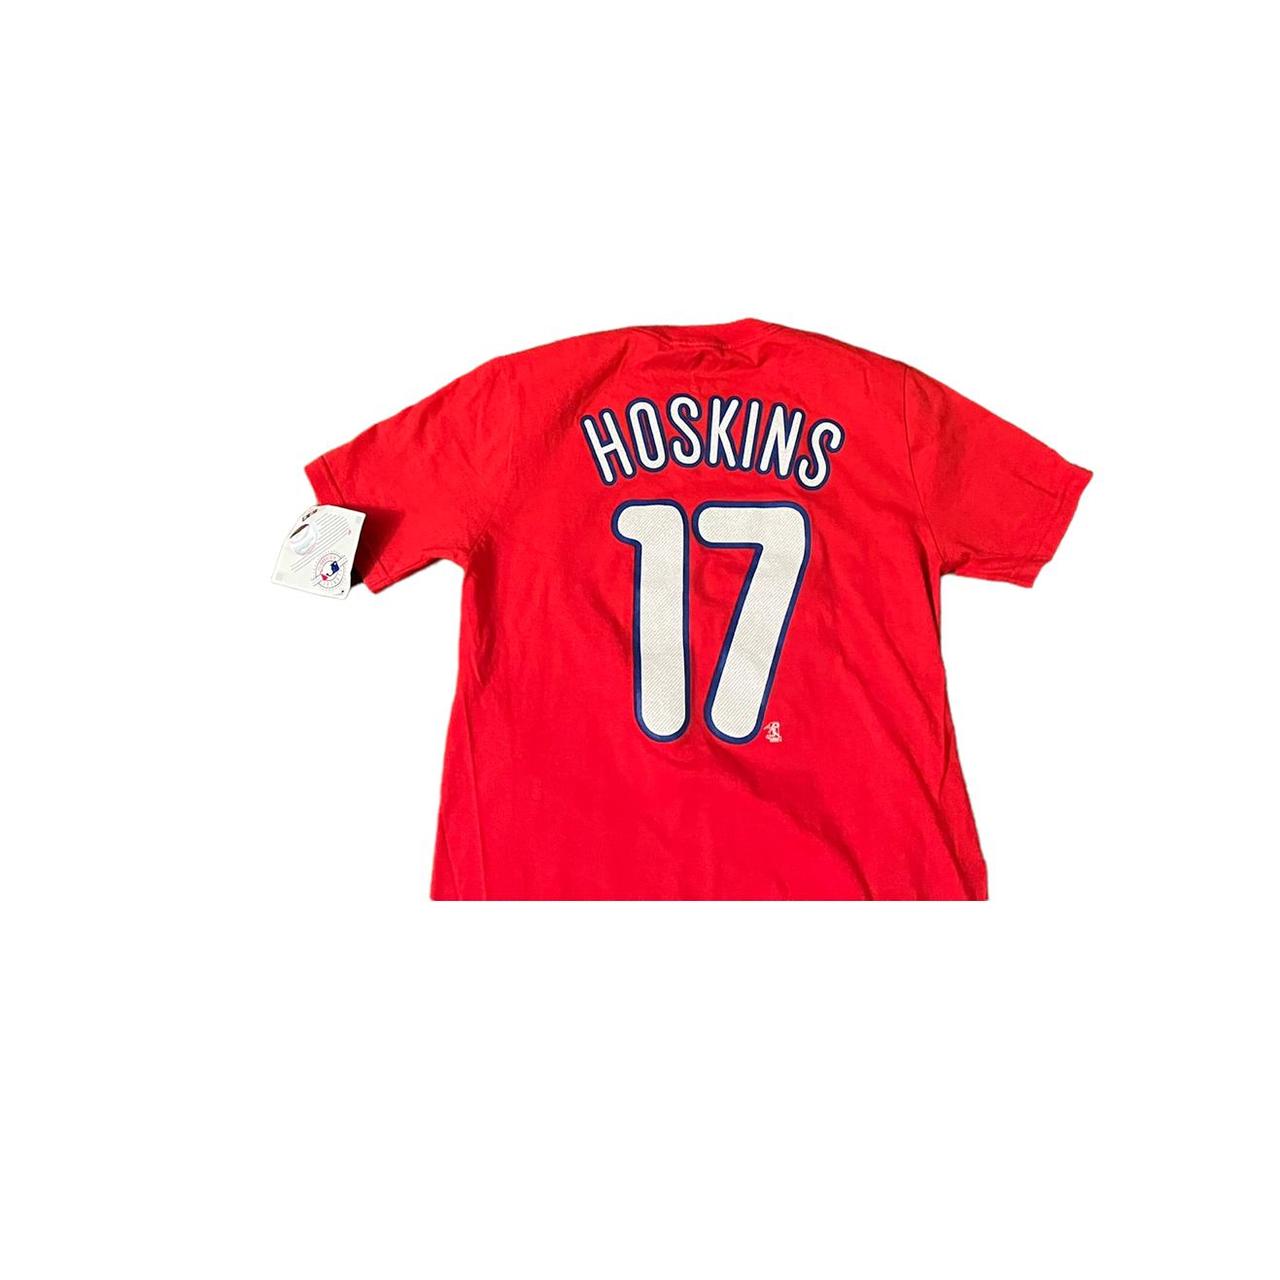 hoskins youth jersey